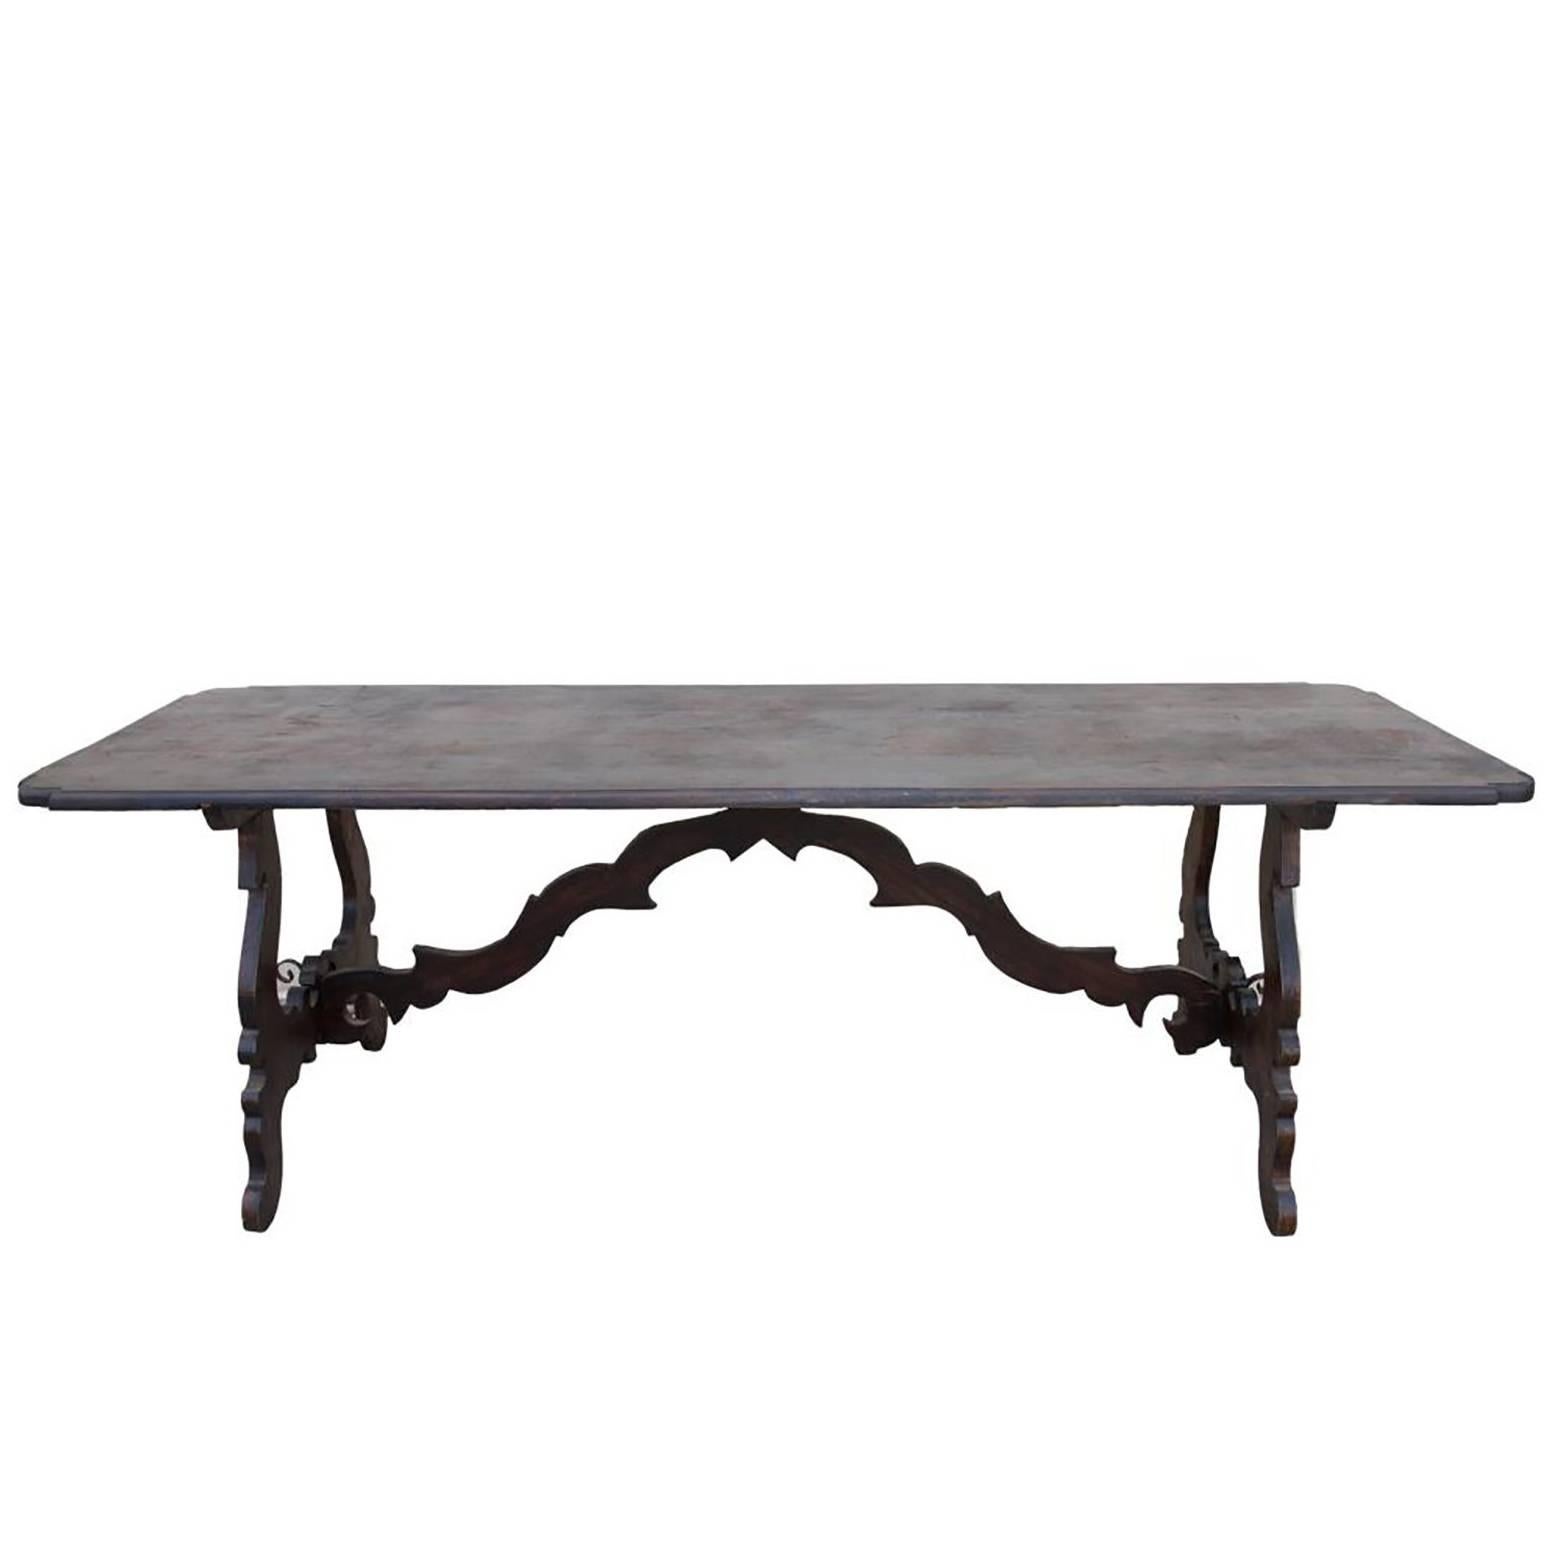 Italian Baroque Style Late 19th Century Dark Wood Monastery Table with Lyre Legs